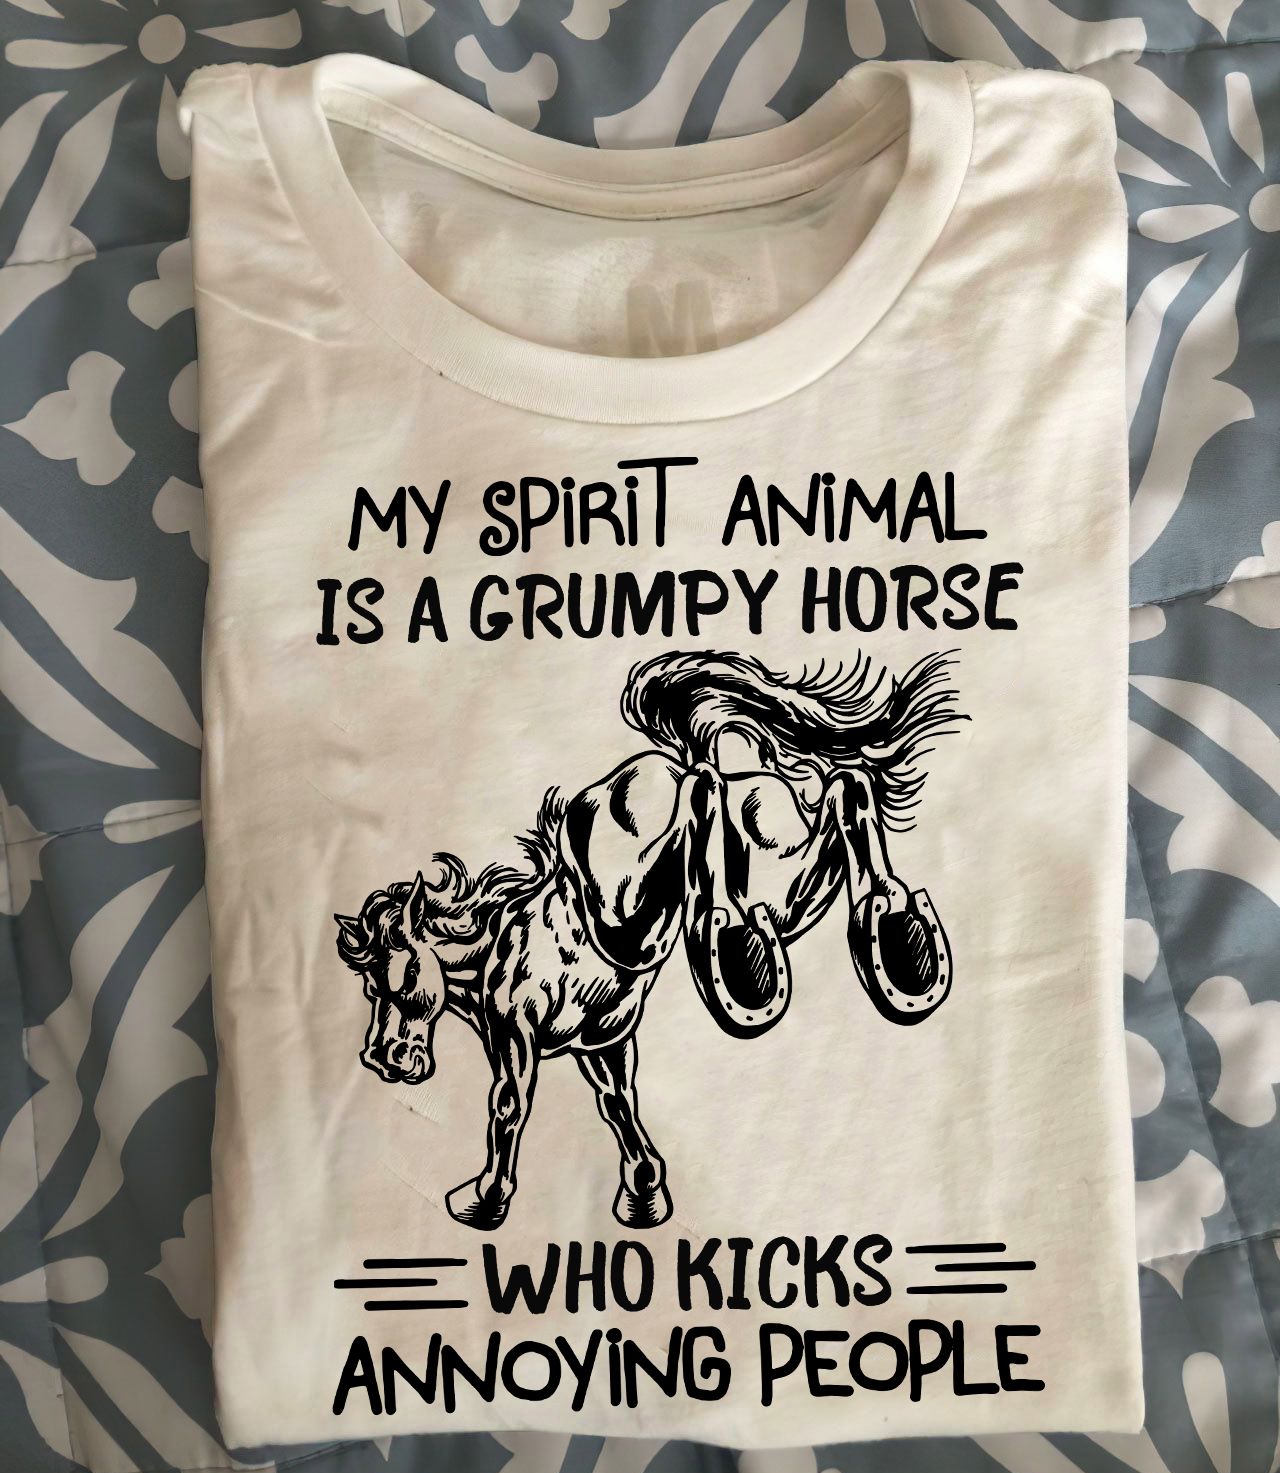 My spirit animal is a grumpy horse who kicks annoying people